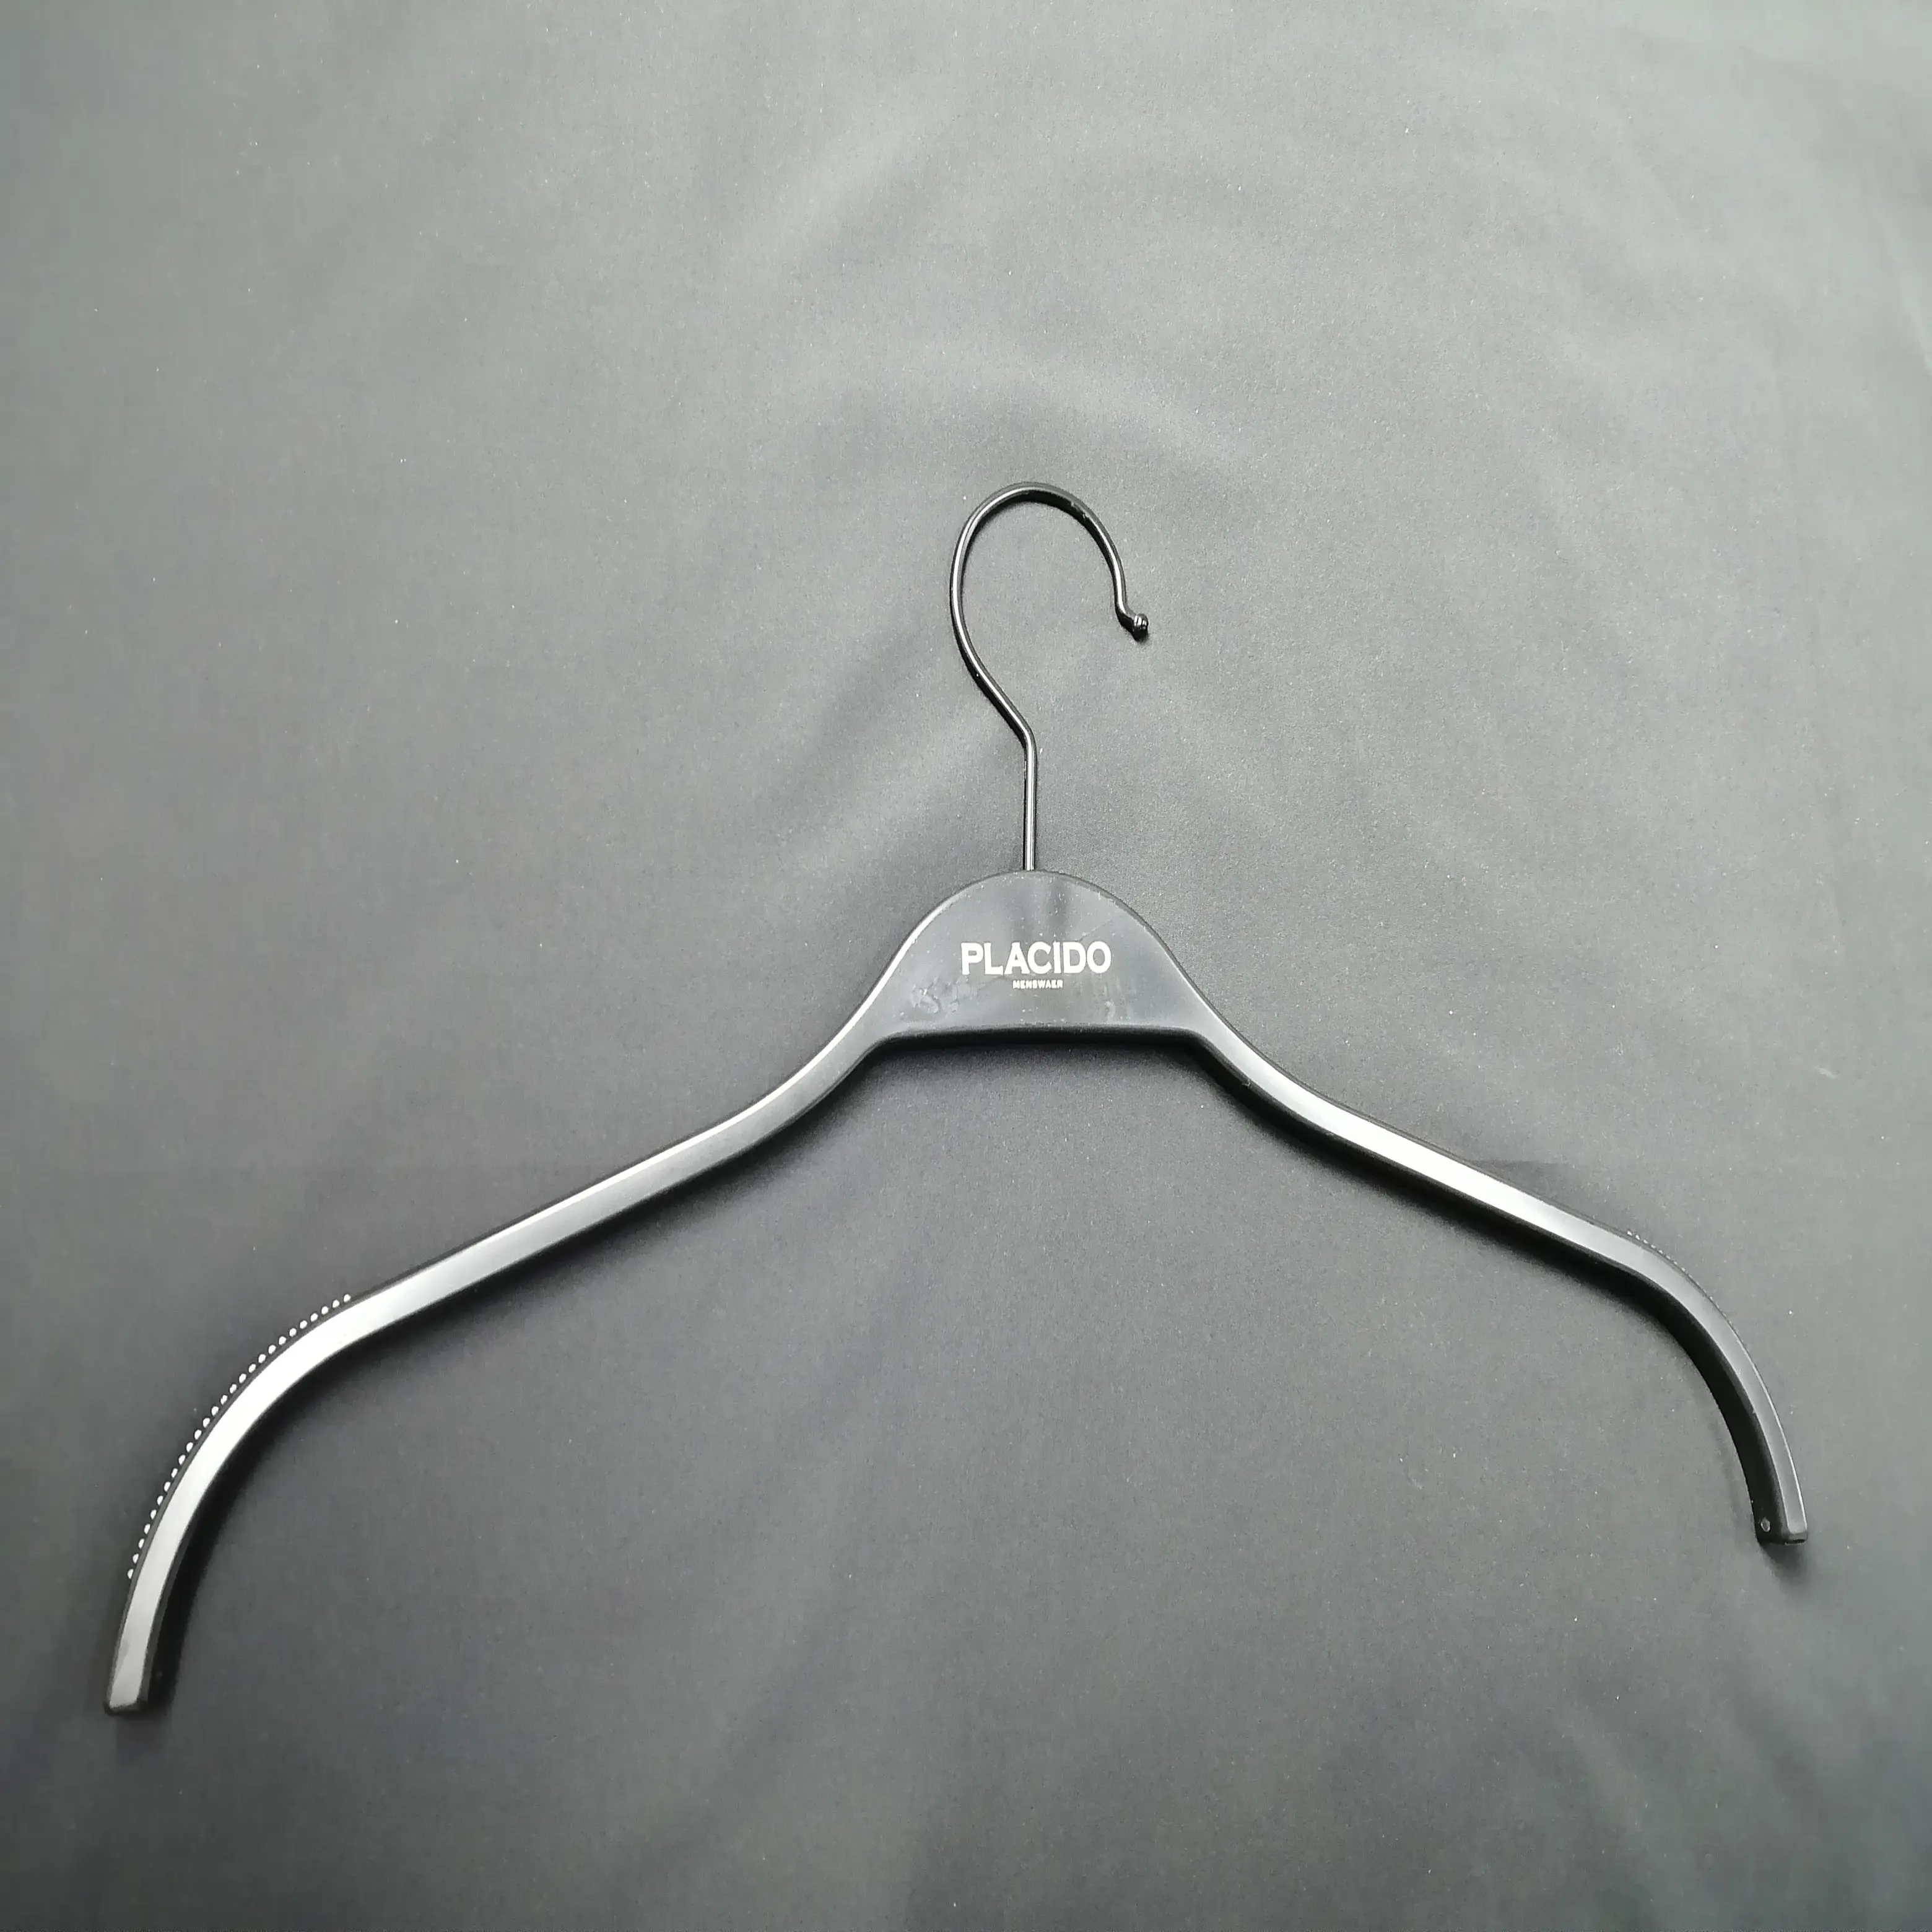 39cm Zara adult black solid Plastic Shirts dress top clothes hanger with metal hook